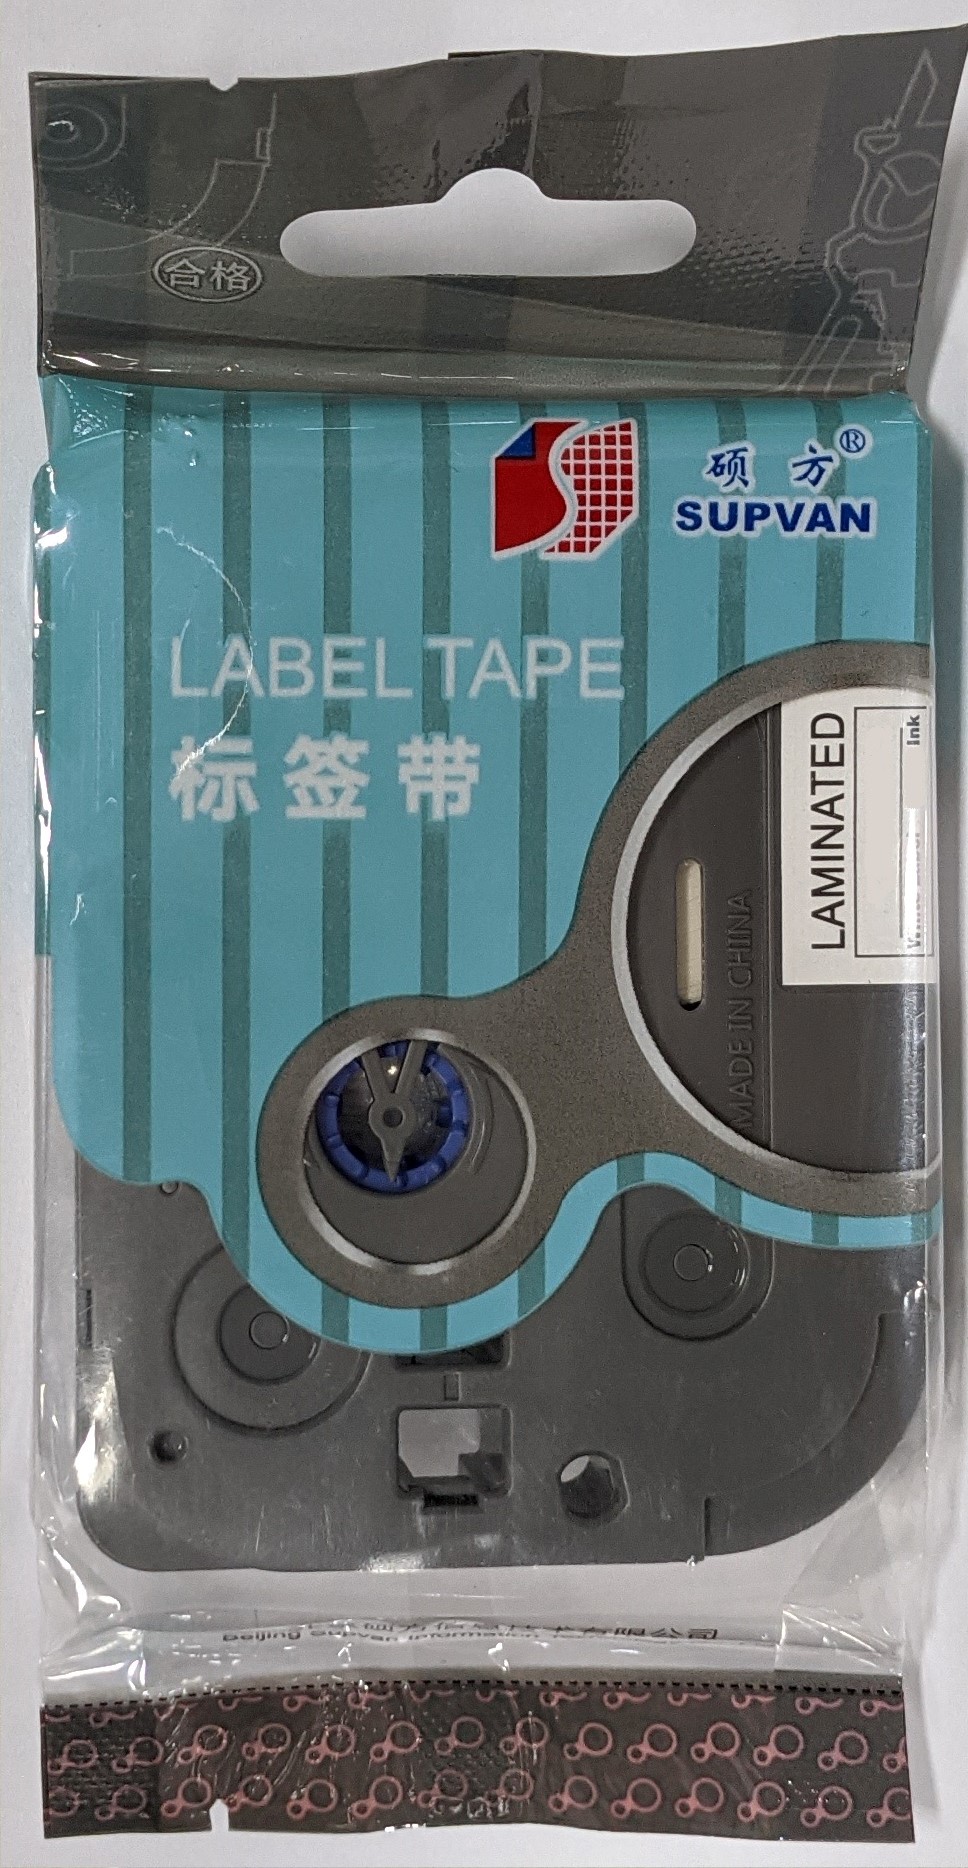 Samolepicí páska Supvan L-334E, 12mm x 8m, zlatý tisk / černý podklad, laminovaná